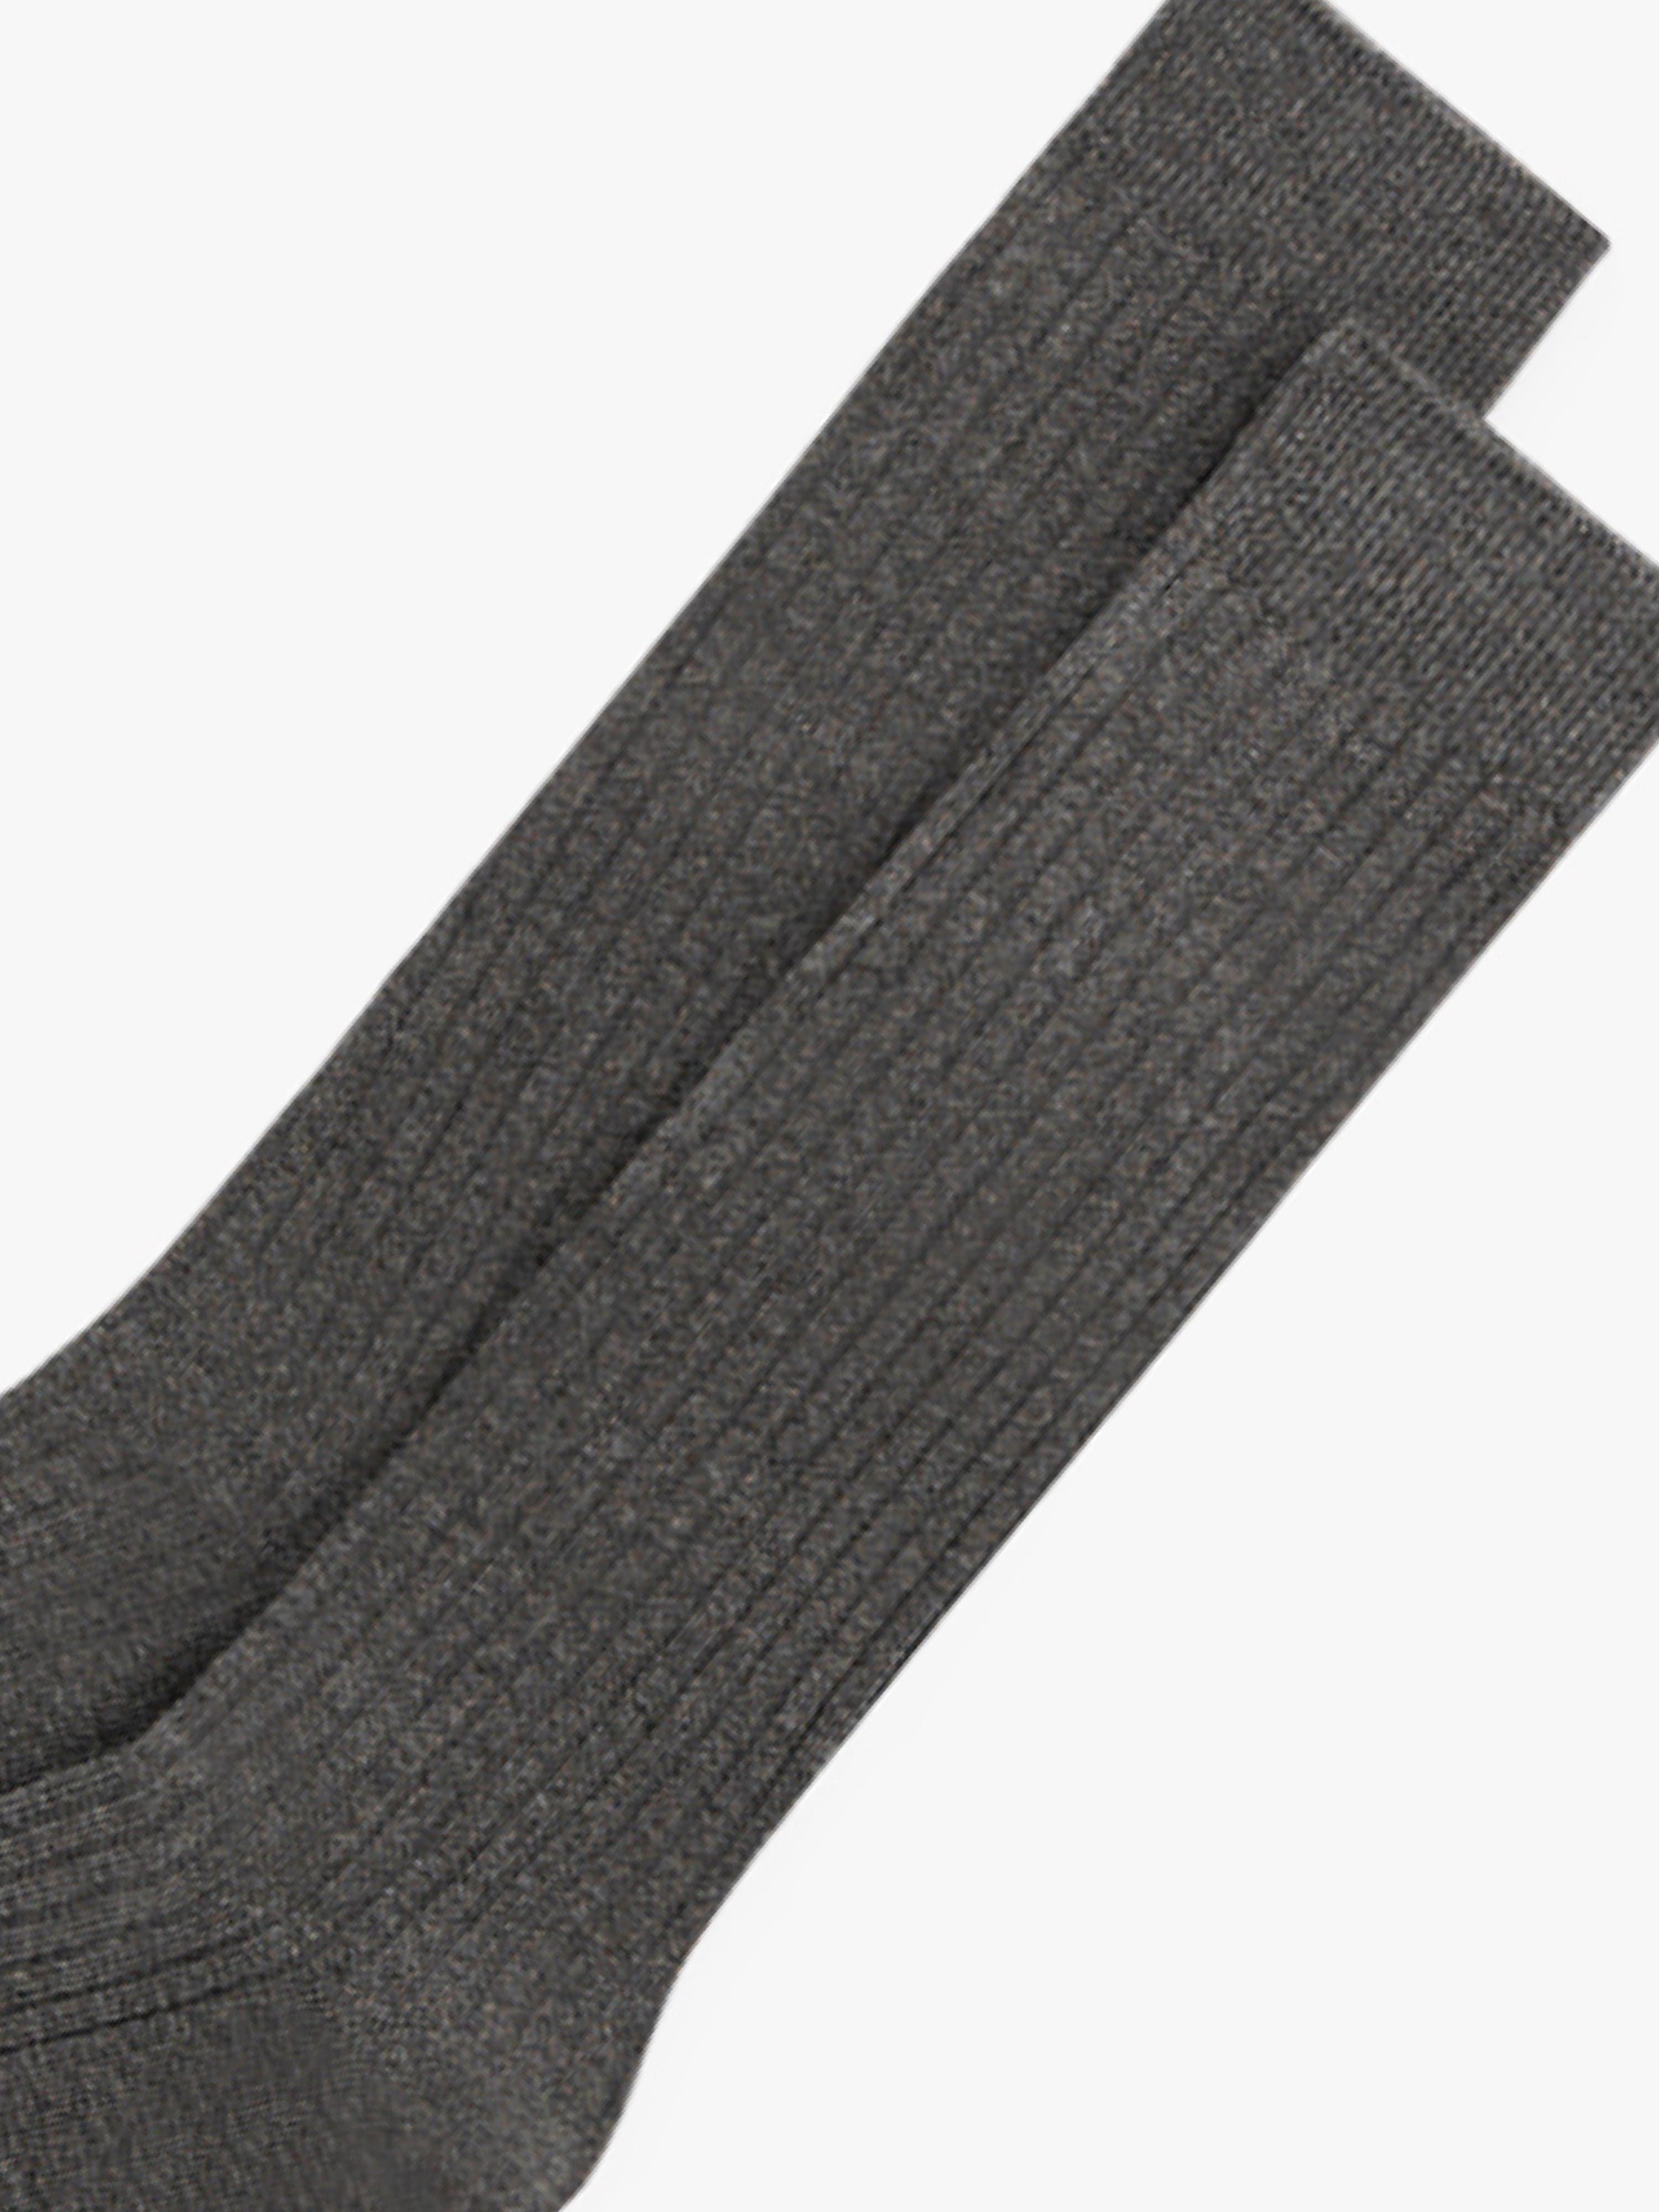 Grey Ribbed Socks (2 pack) - Grand Le Mar